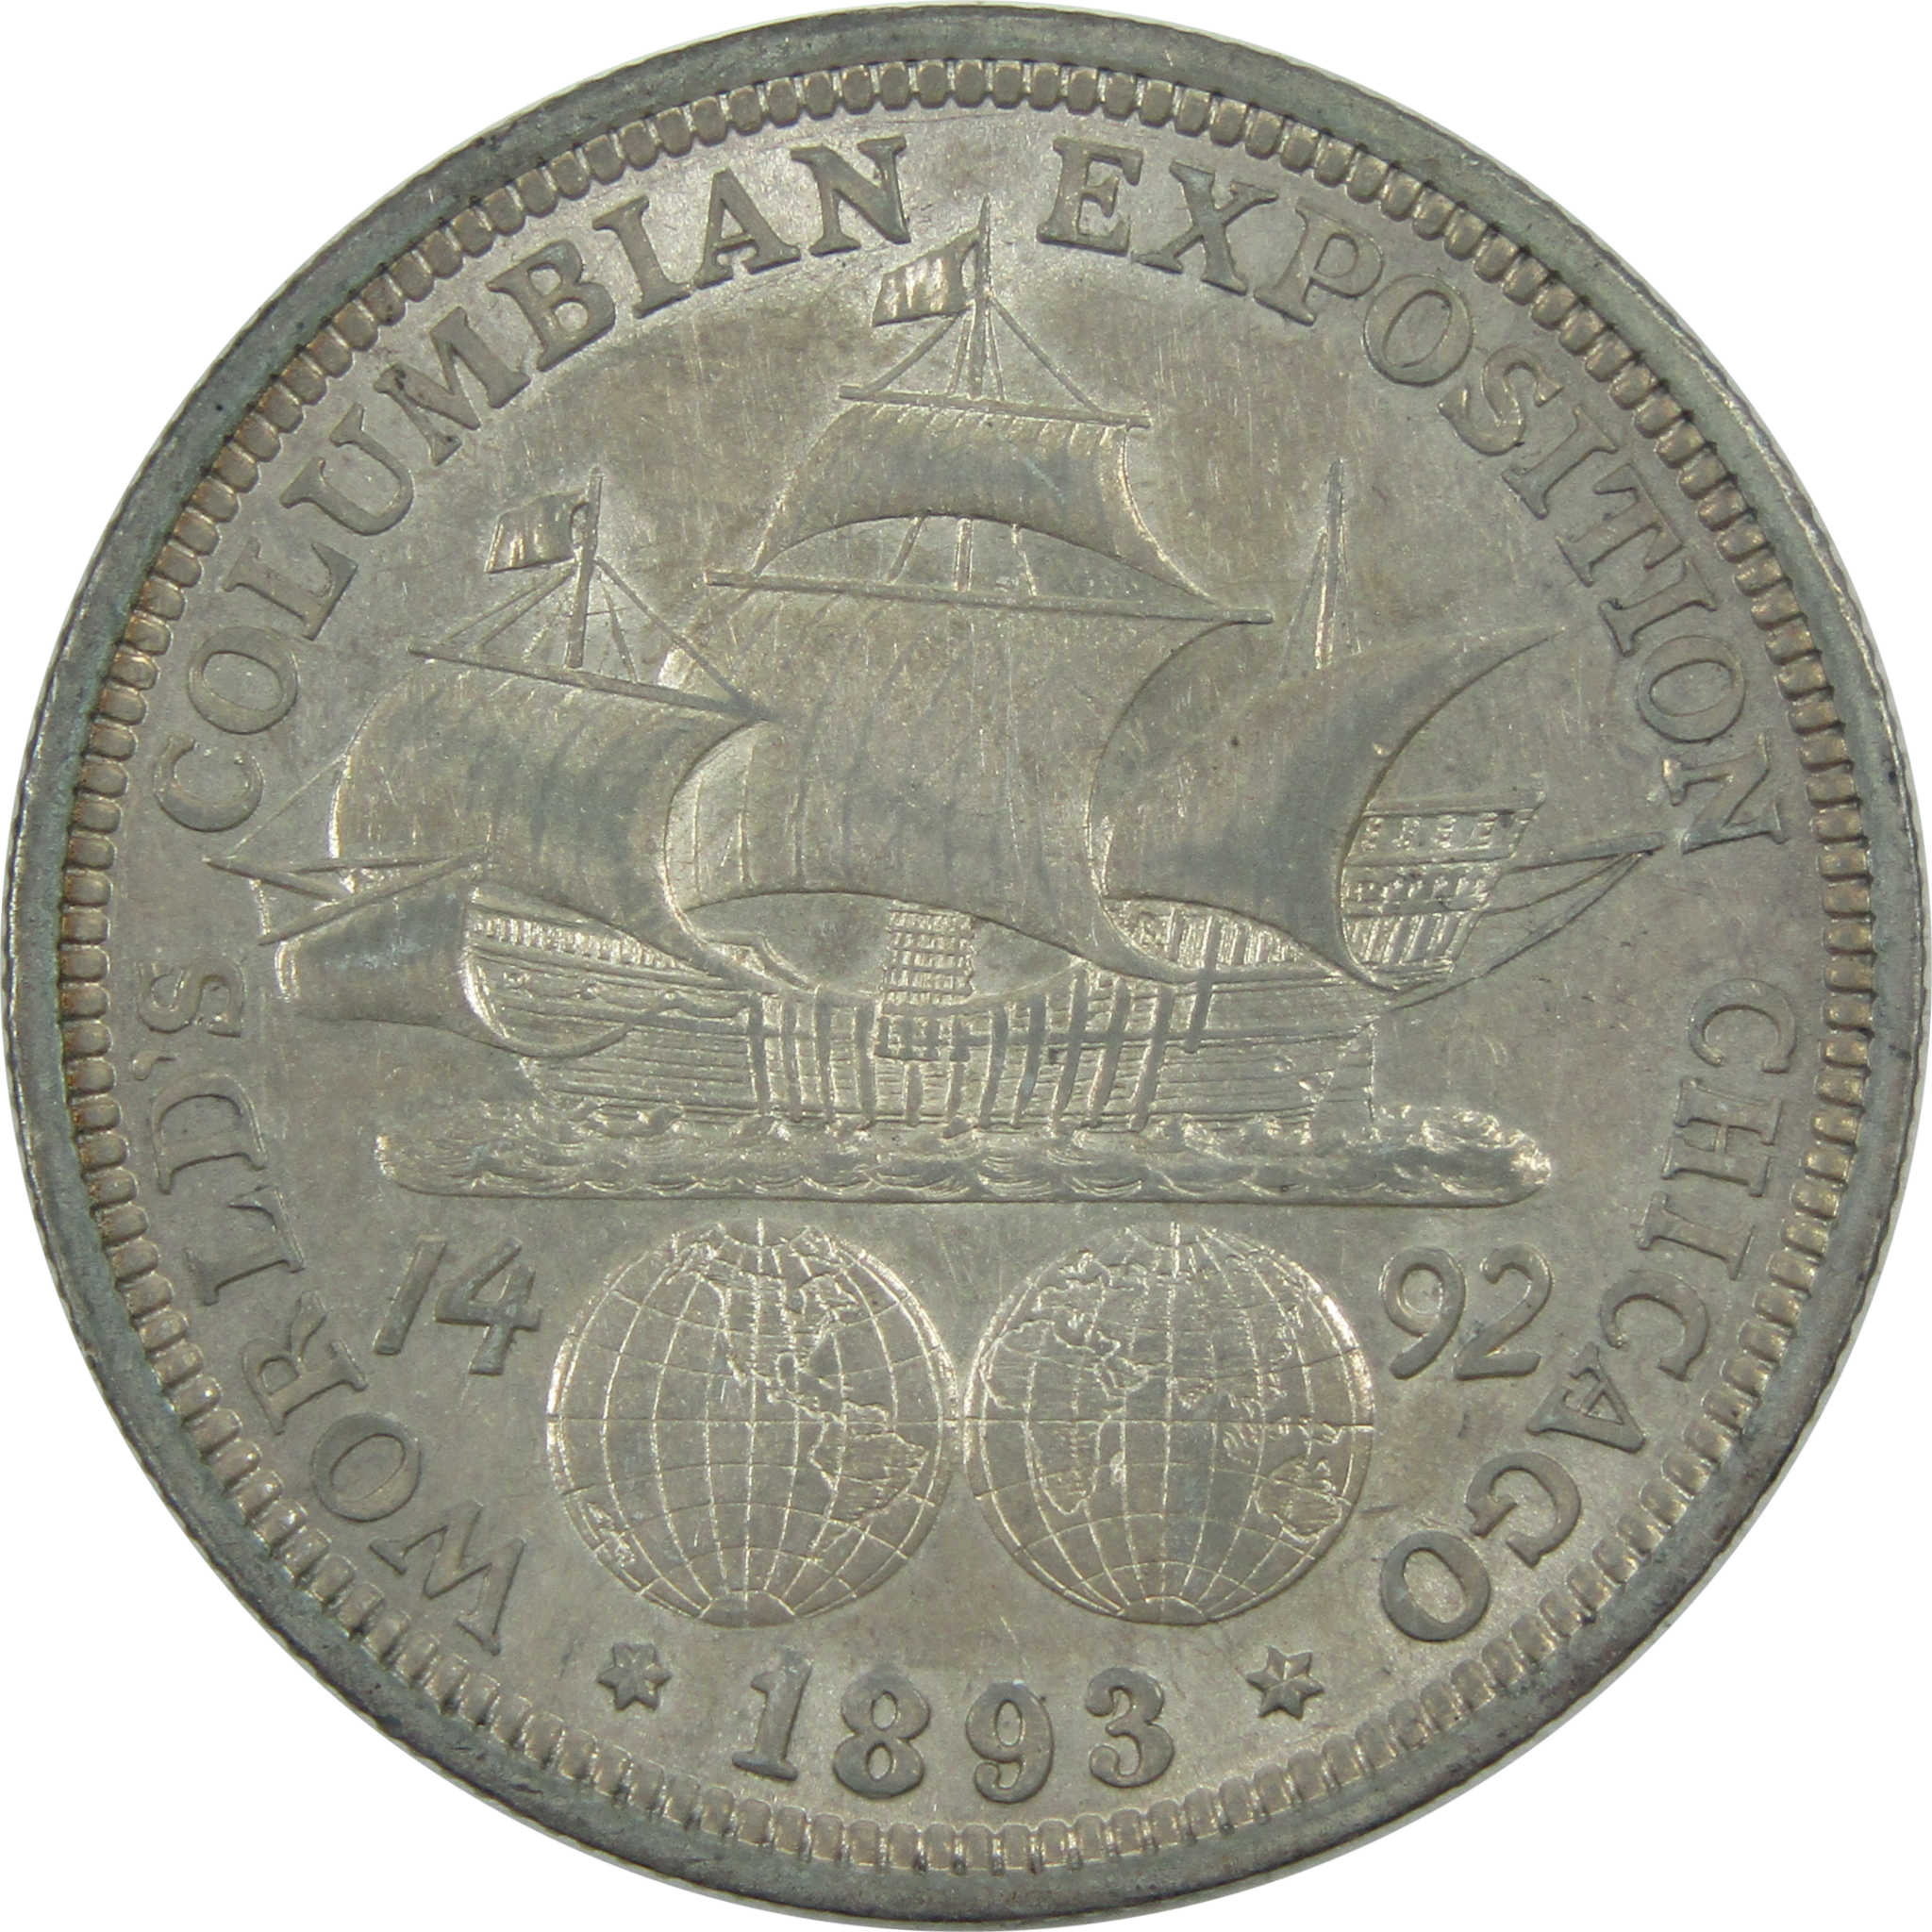 World's Columbian Exposition Half 1893 AU Silver 50c Coin SKU:I13460